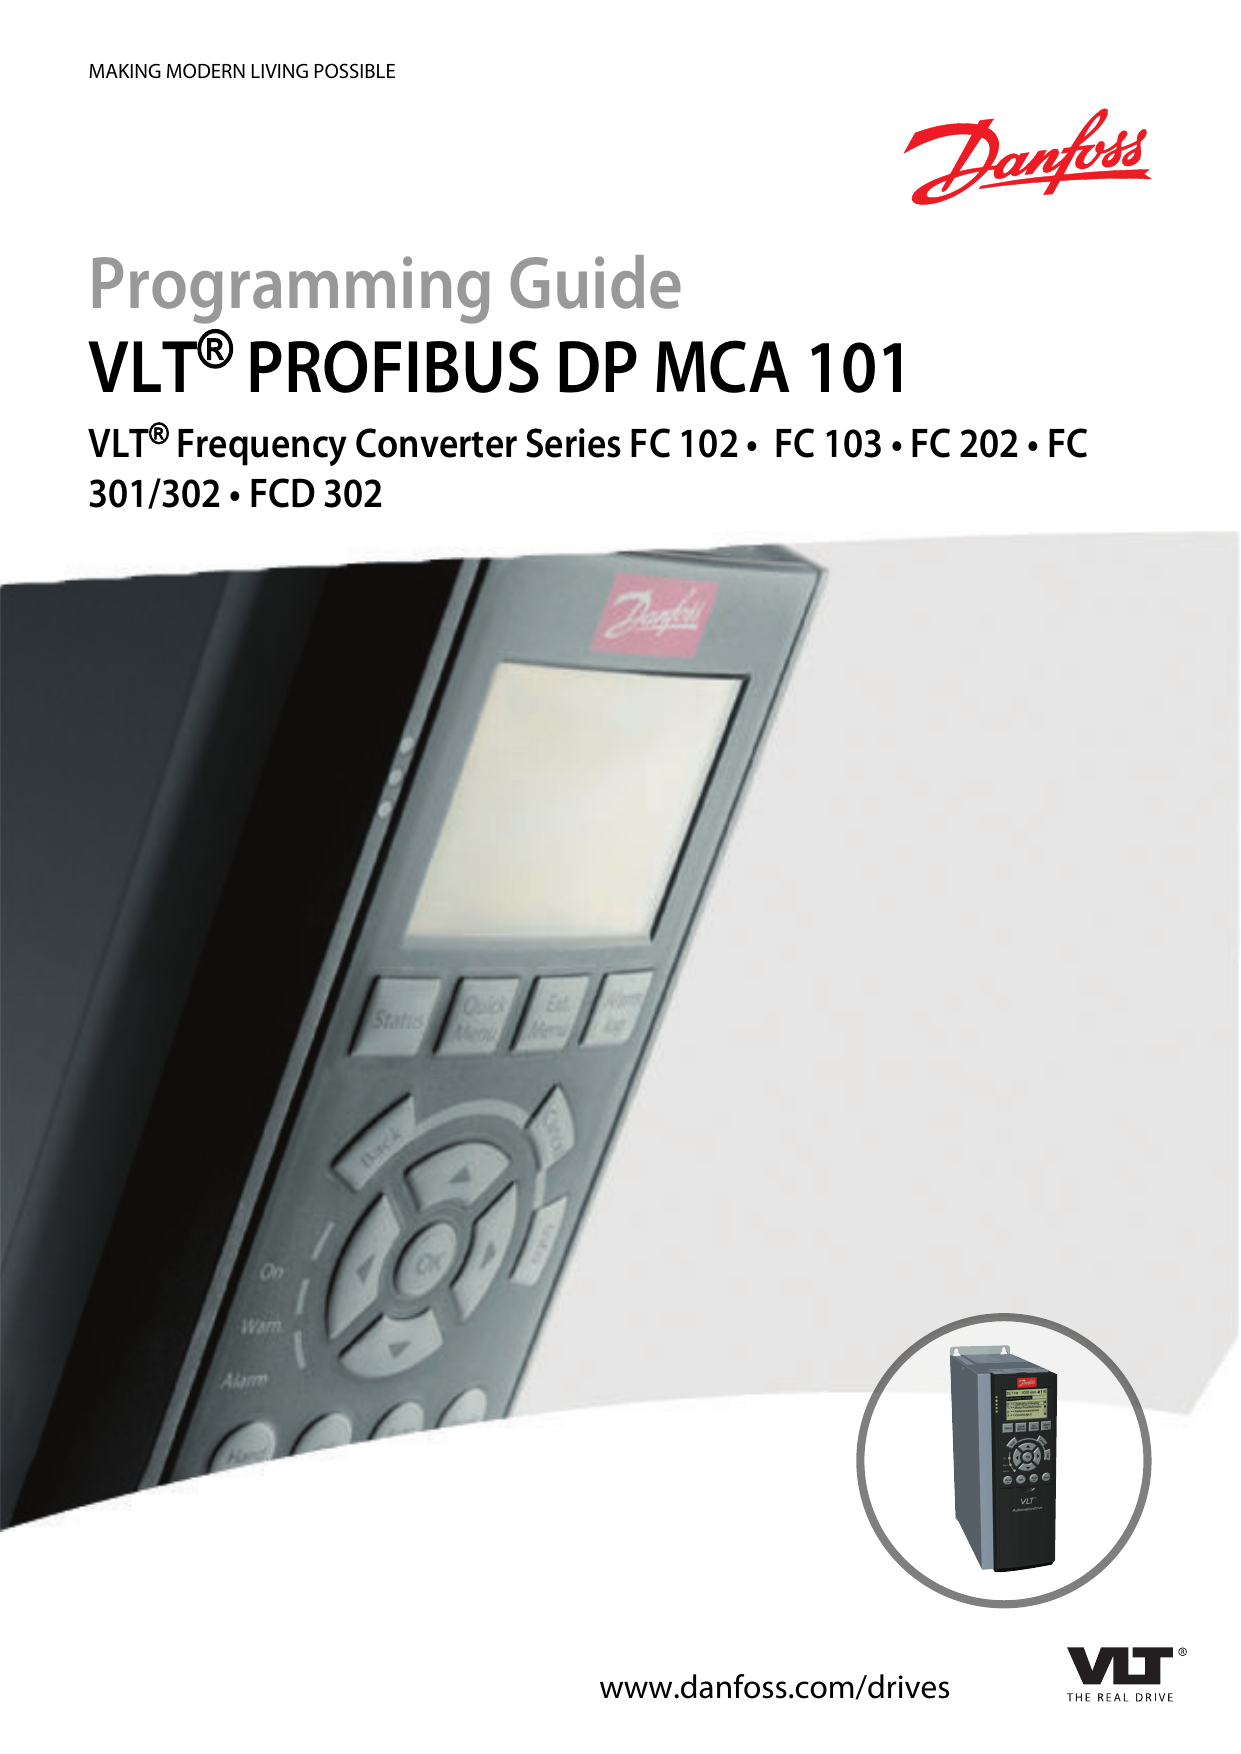 Danfoss MCA101 PROFIBUS OPTION A 130B1100 VLT FC300 FC202 FC102 